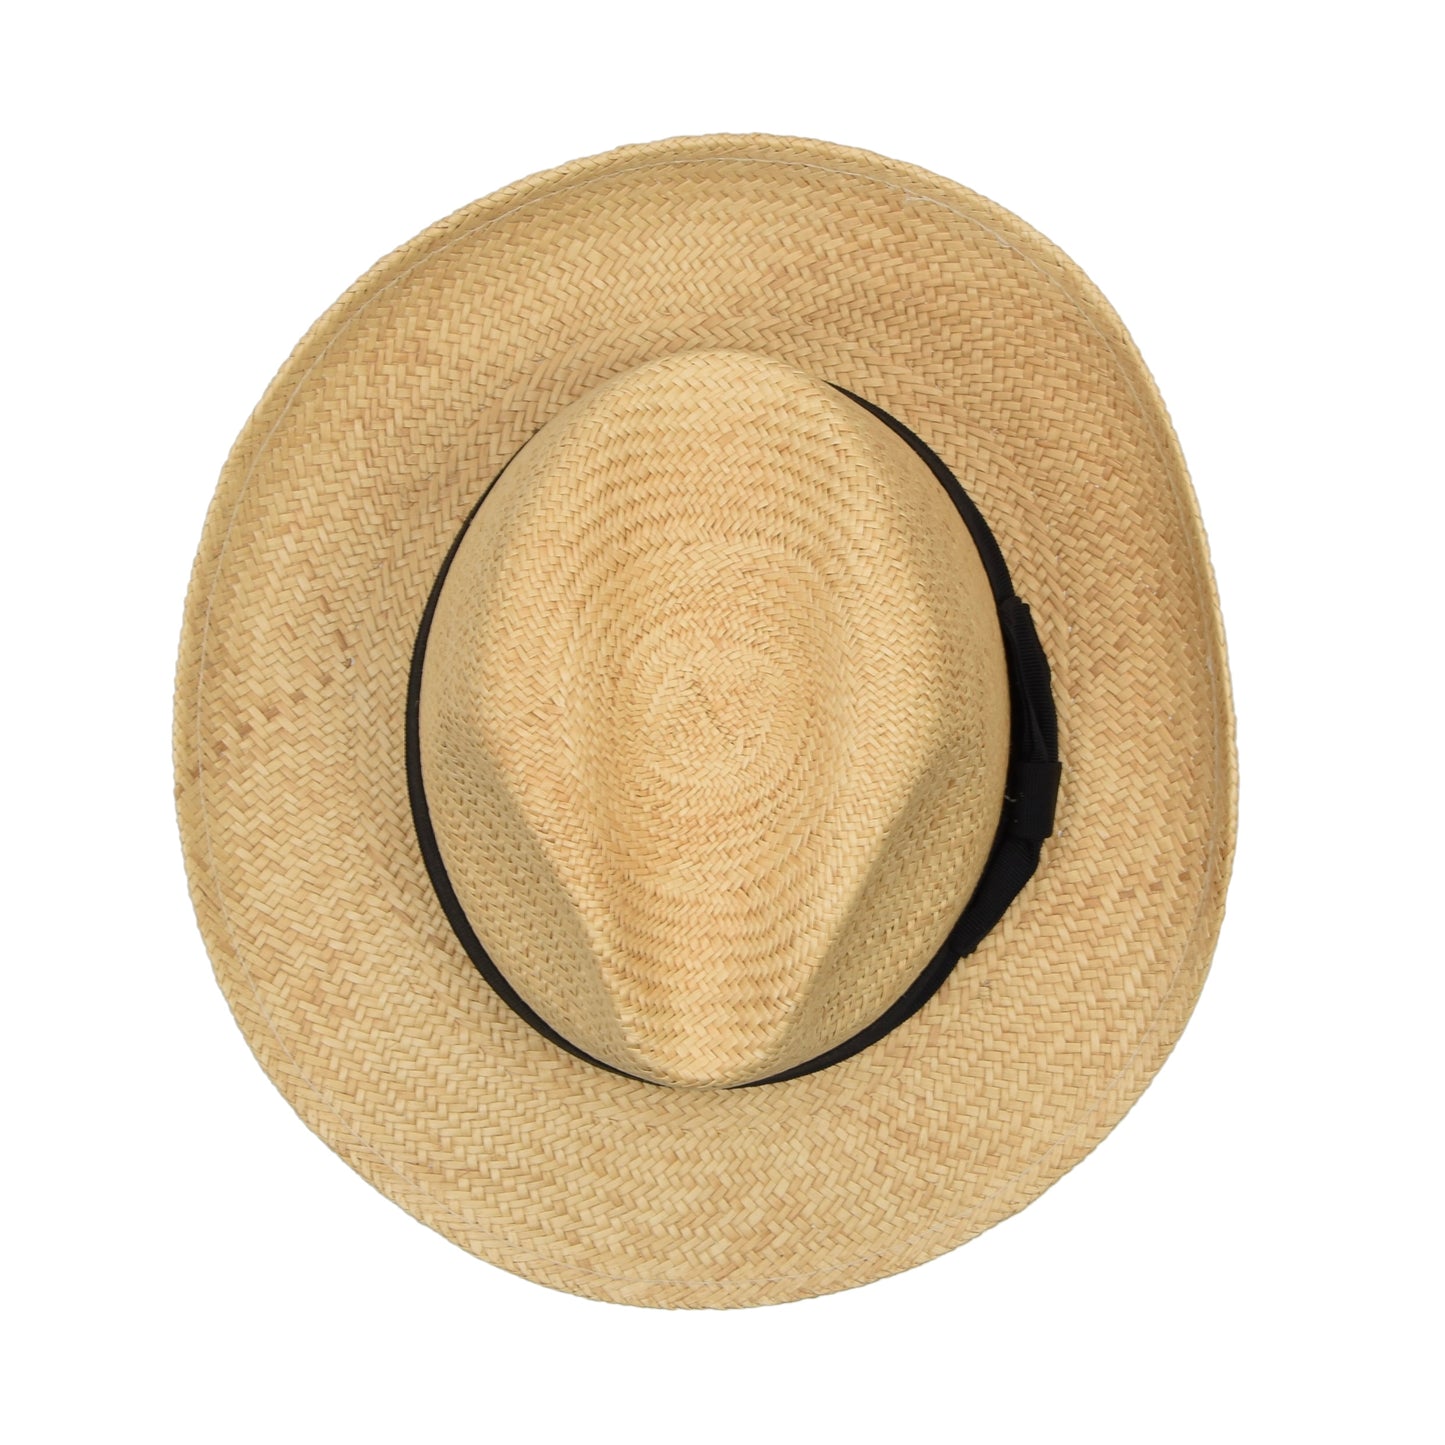 Oriental Panama Straw Hat Size 57 - Beige/Tan